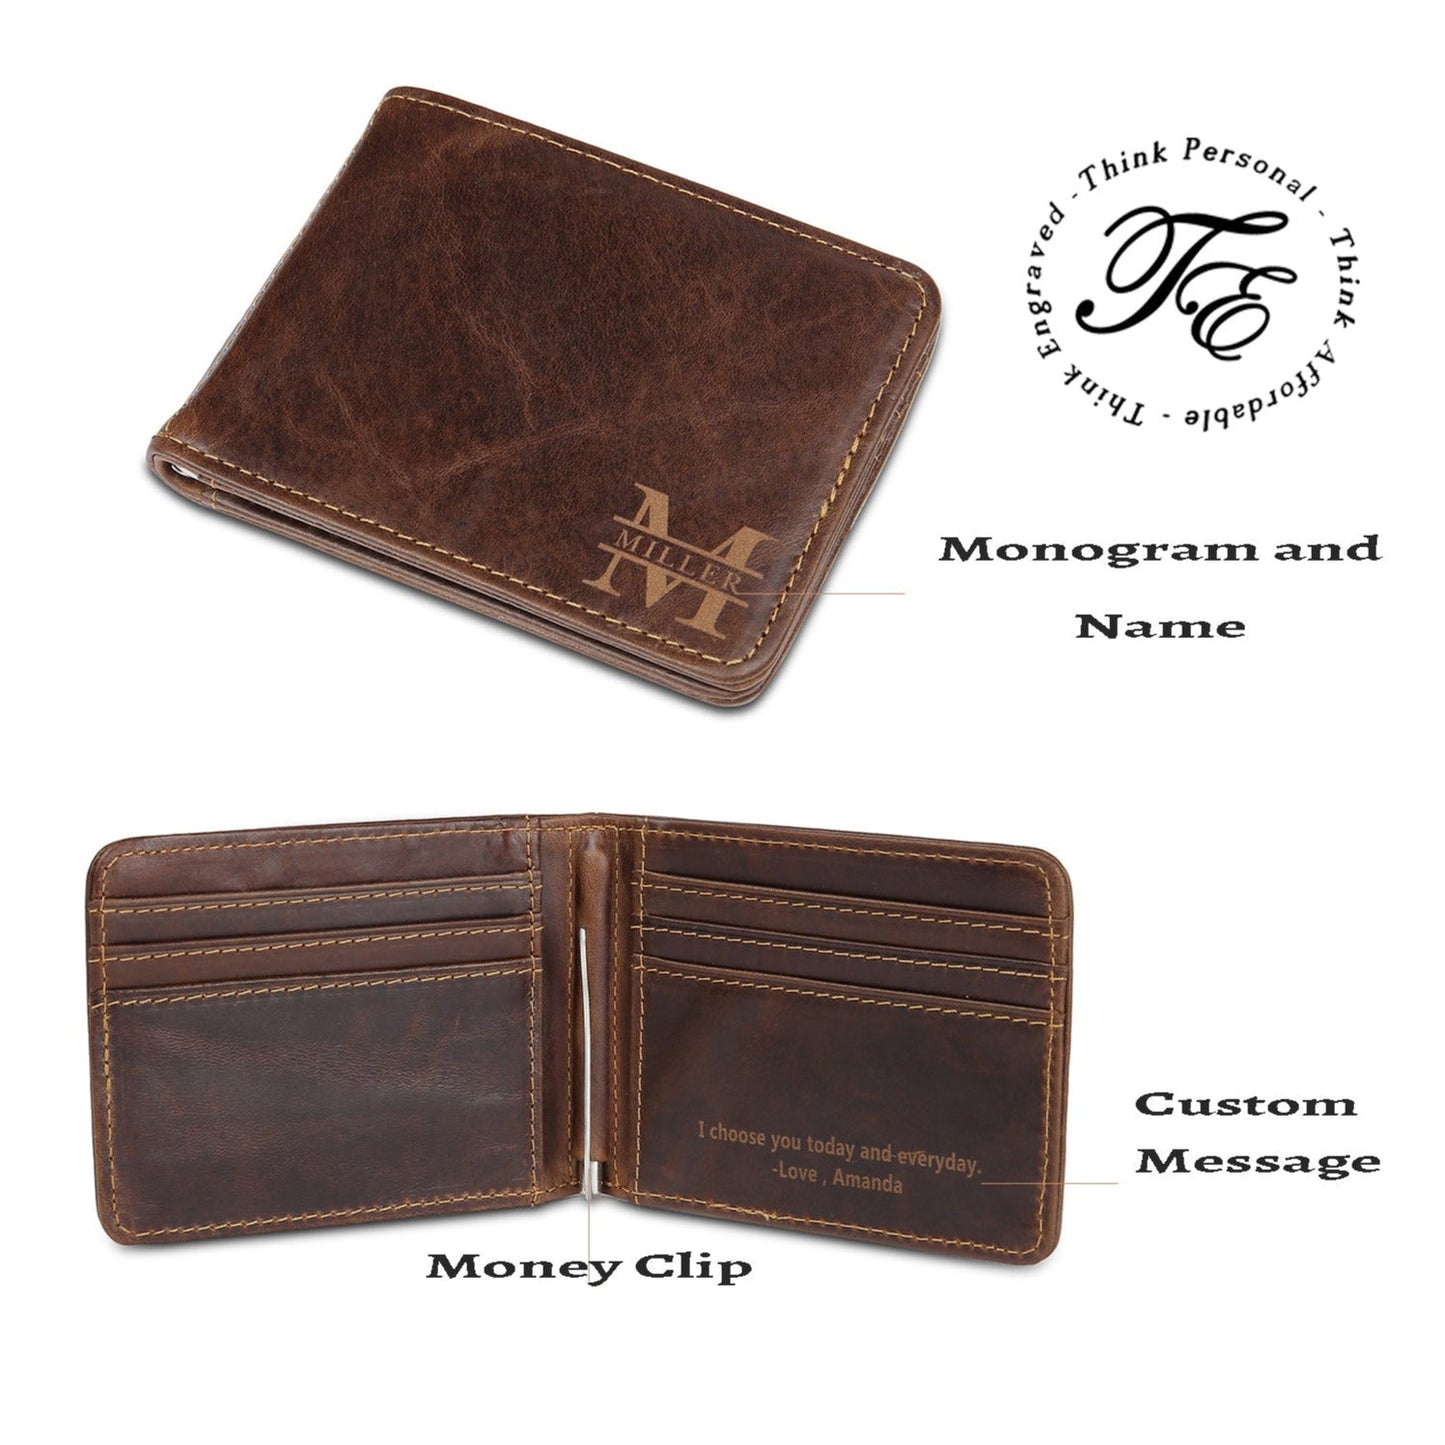 ThinkEngraved Custom Keychain Personalized Men's Leather Bi-fold Wallet Card Holder Monogram and Name